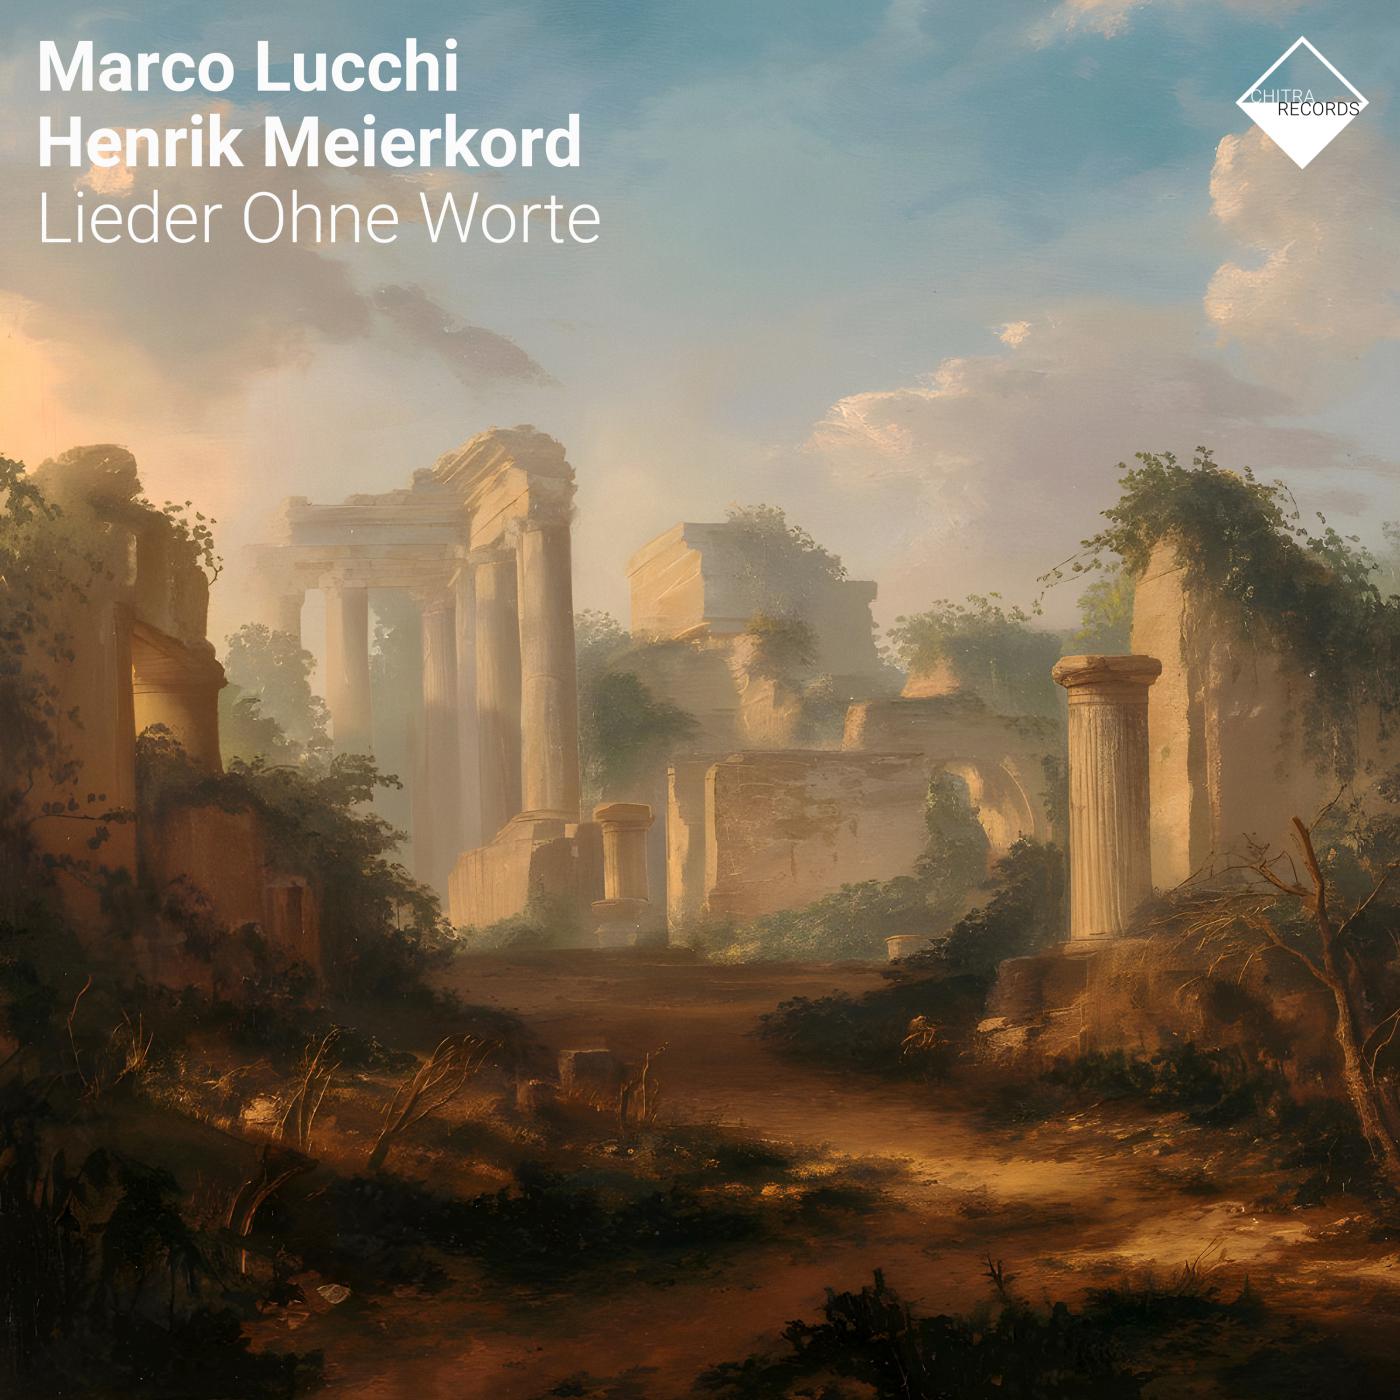 Marco Lucchi - In a Gadda Da Vida